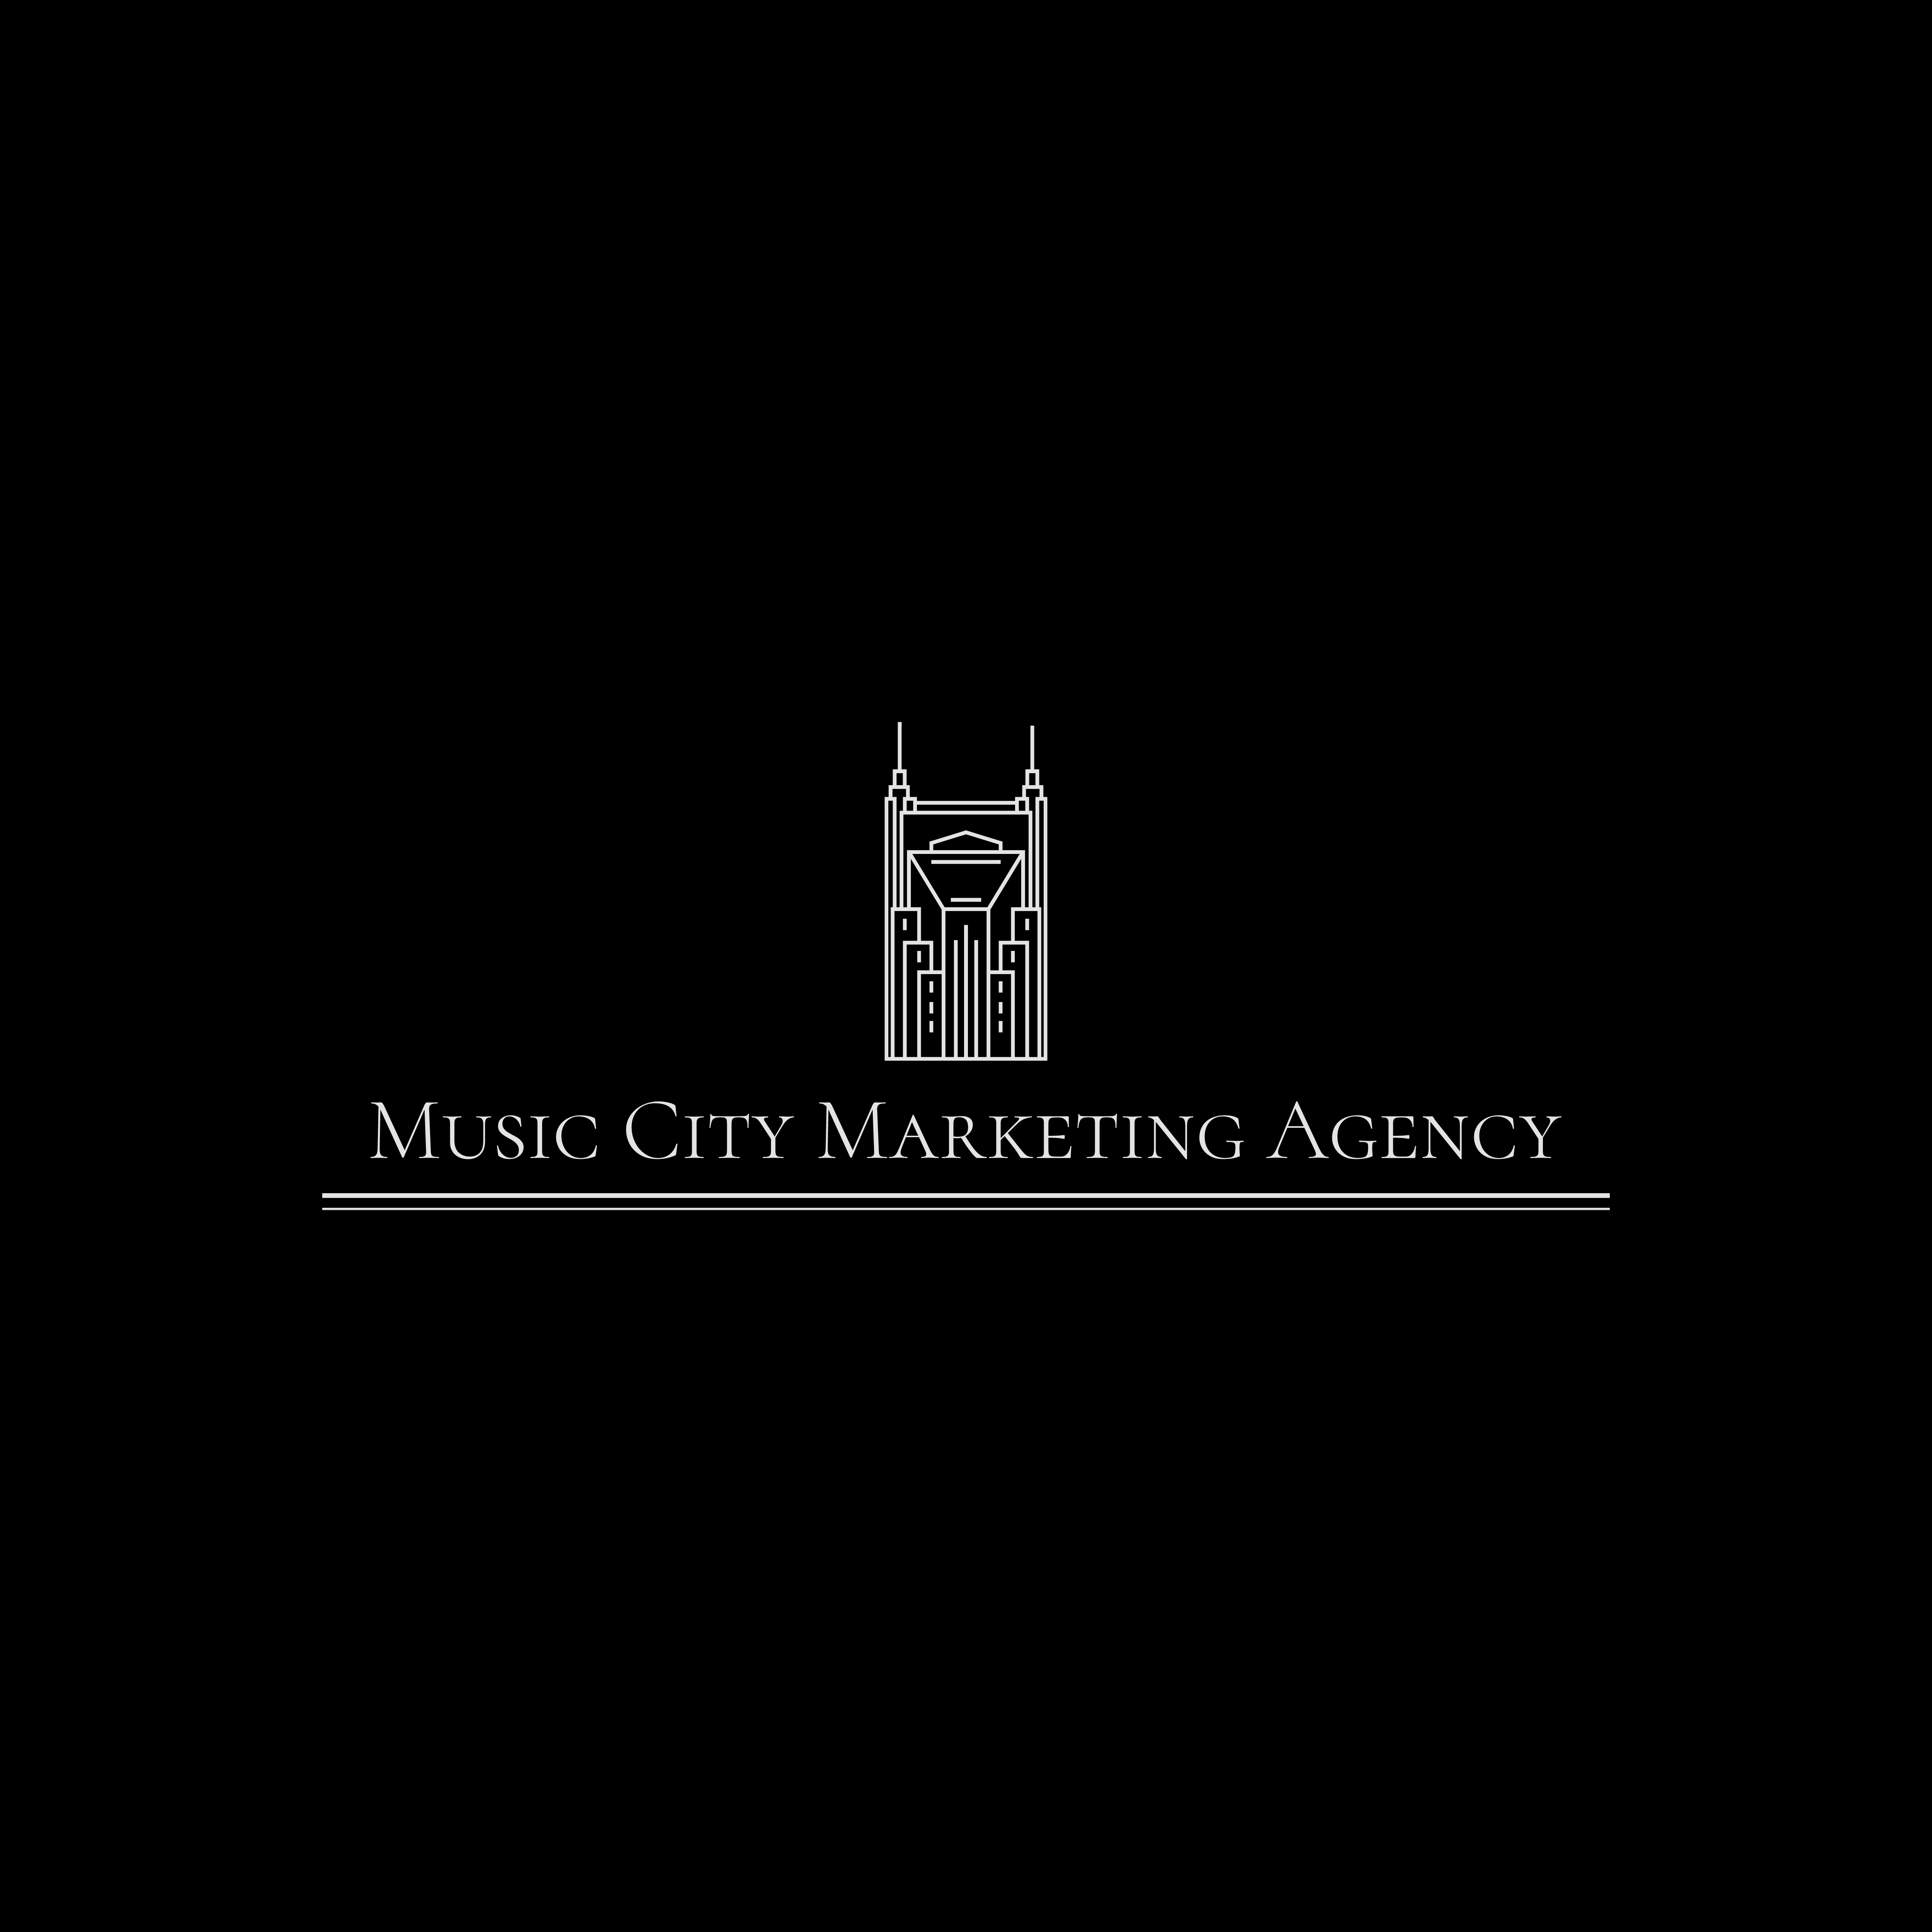 Music City Marketing Agency